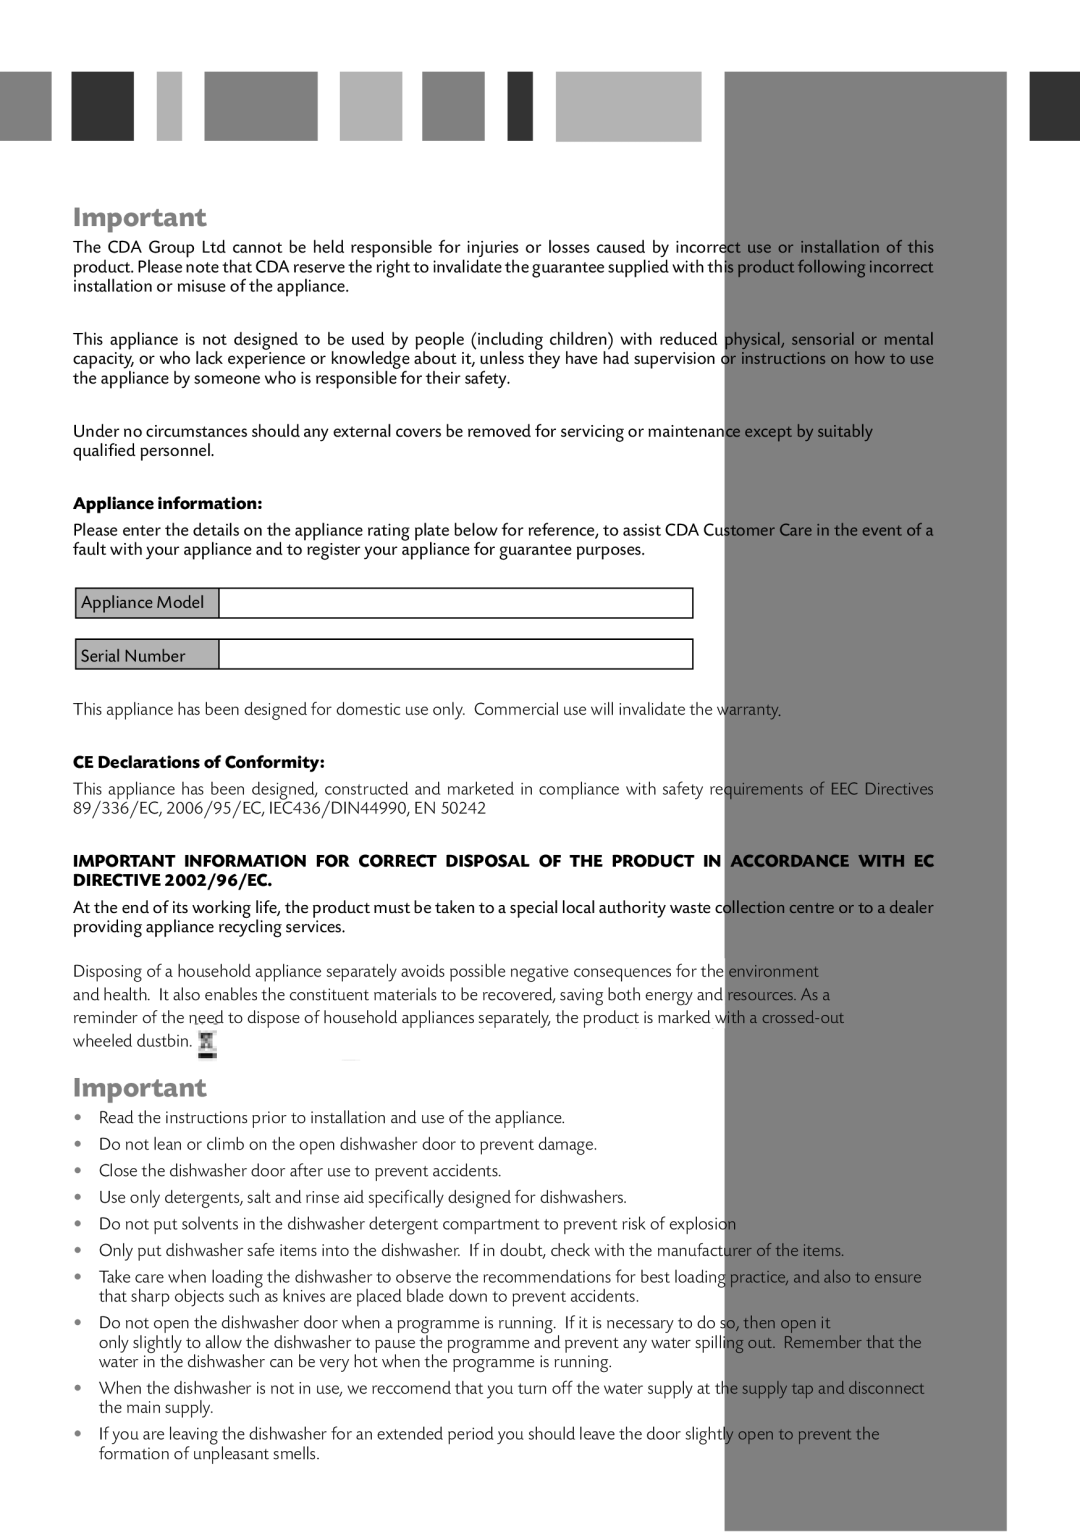 Bosch Appliances WC140 manual Appliance information, CE Declarations of Conformity 